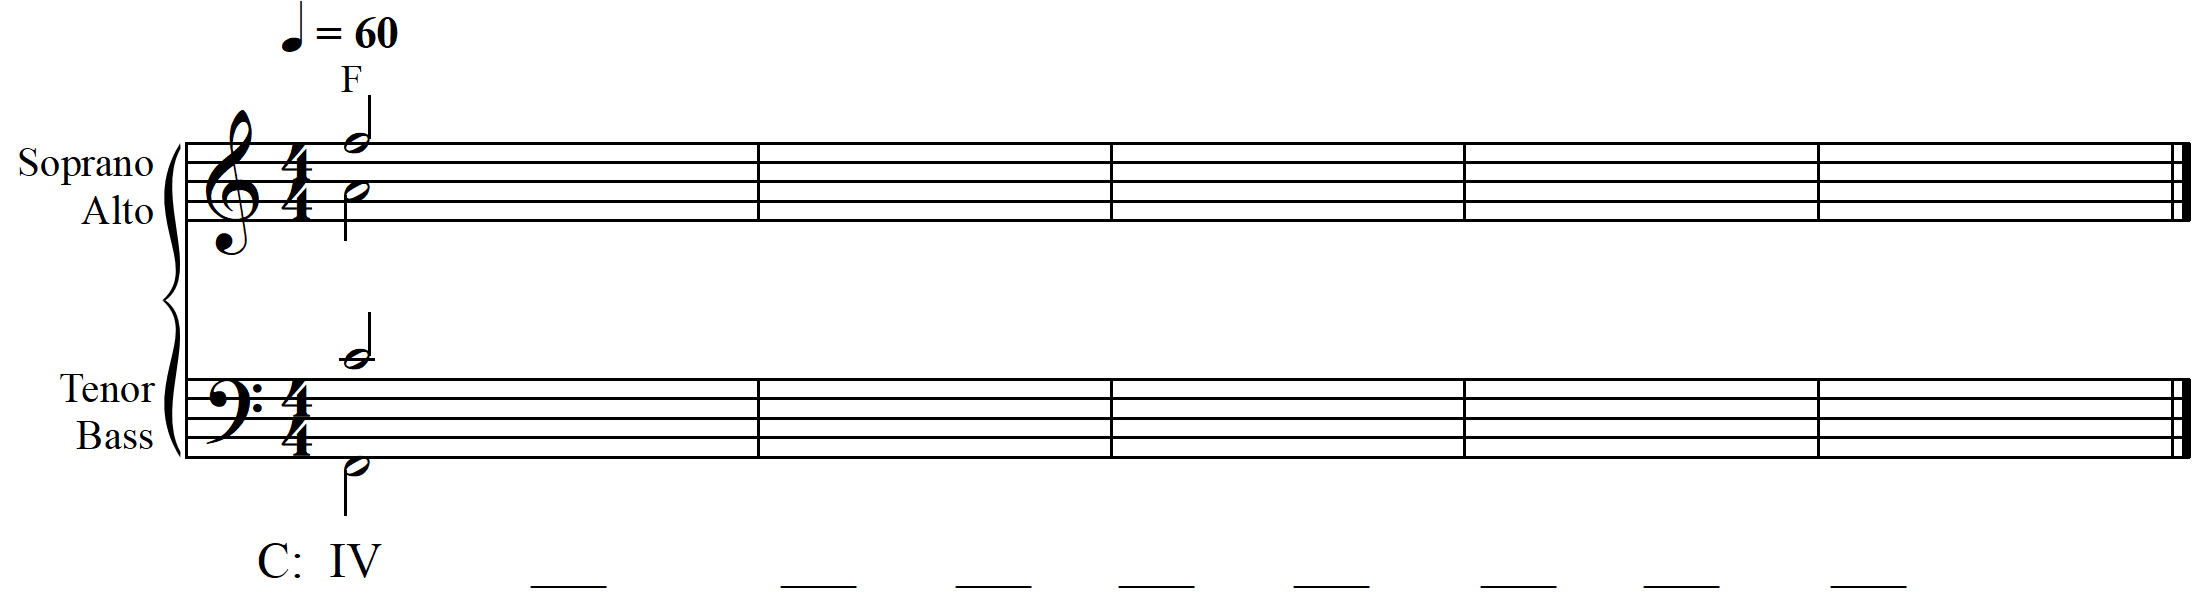 melodic dictation simple meter intermediate example 4